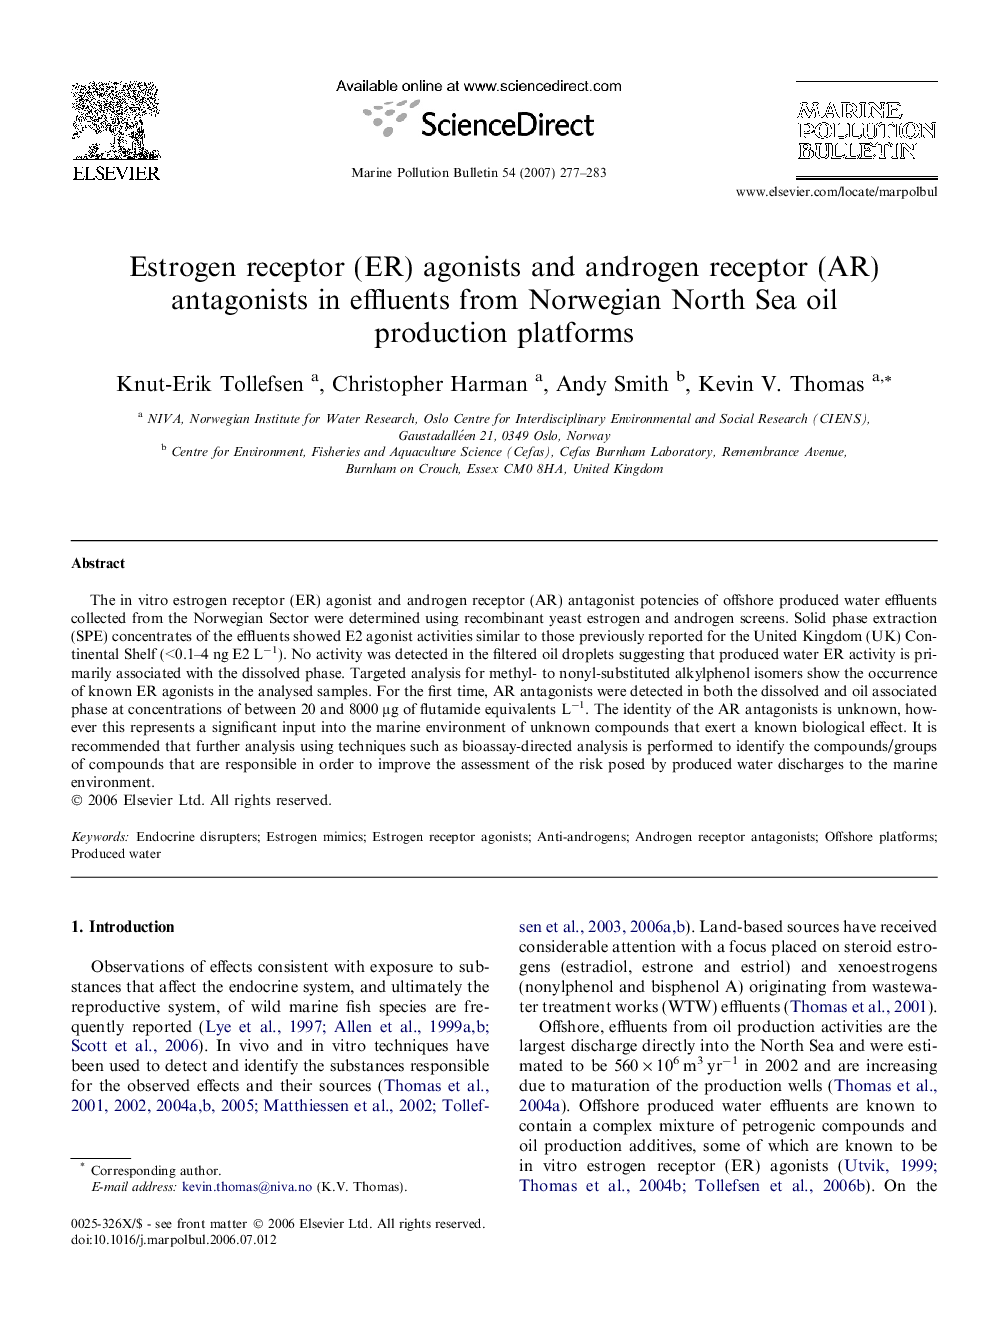 Estrogen receptor (ER) agonists and androgen receptor (AR) antagonists in effluents from Norwegian North Sea oil production platforms